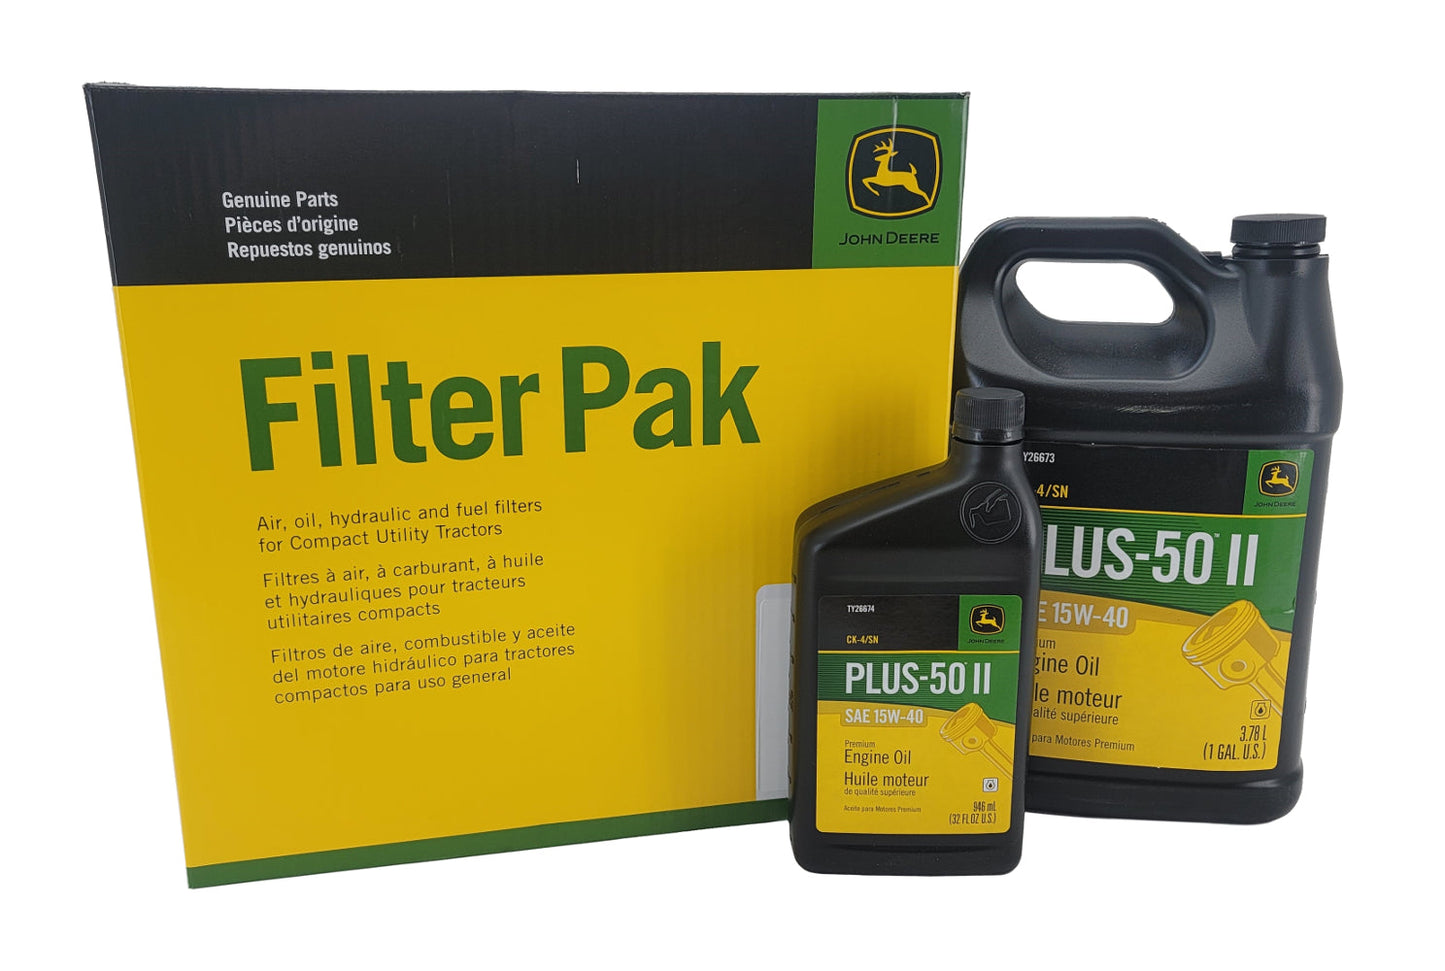 John Deere Original Equipment Filter Pak with Oil Kit - LVA21128A